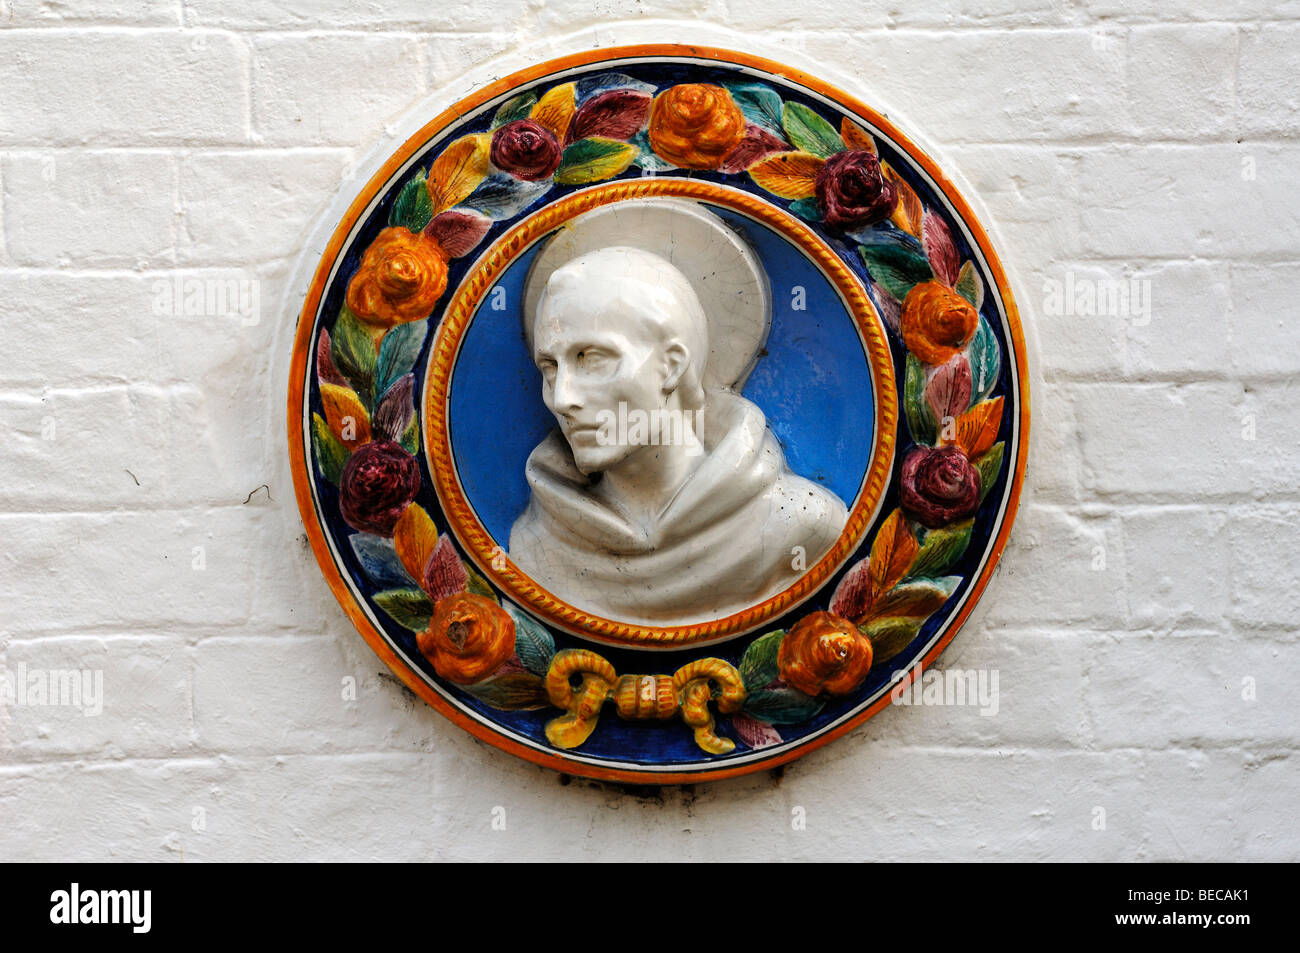 Ceramic figure of St. Francis on a community hall, High Street, Hemingford Gray, Cambridgeshire, England, United Kingdom, Europe Stock Photo